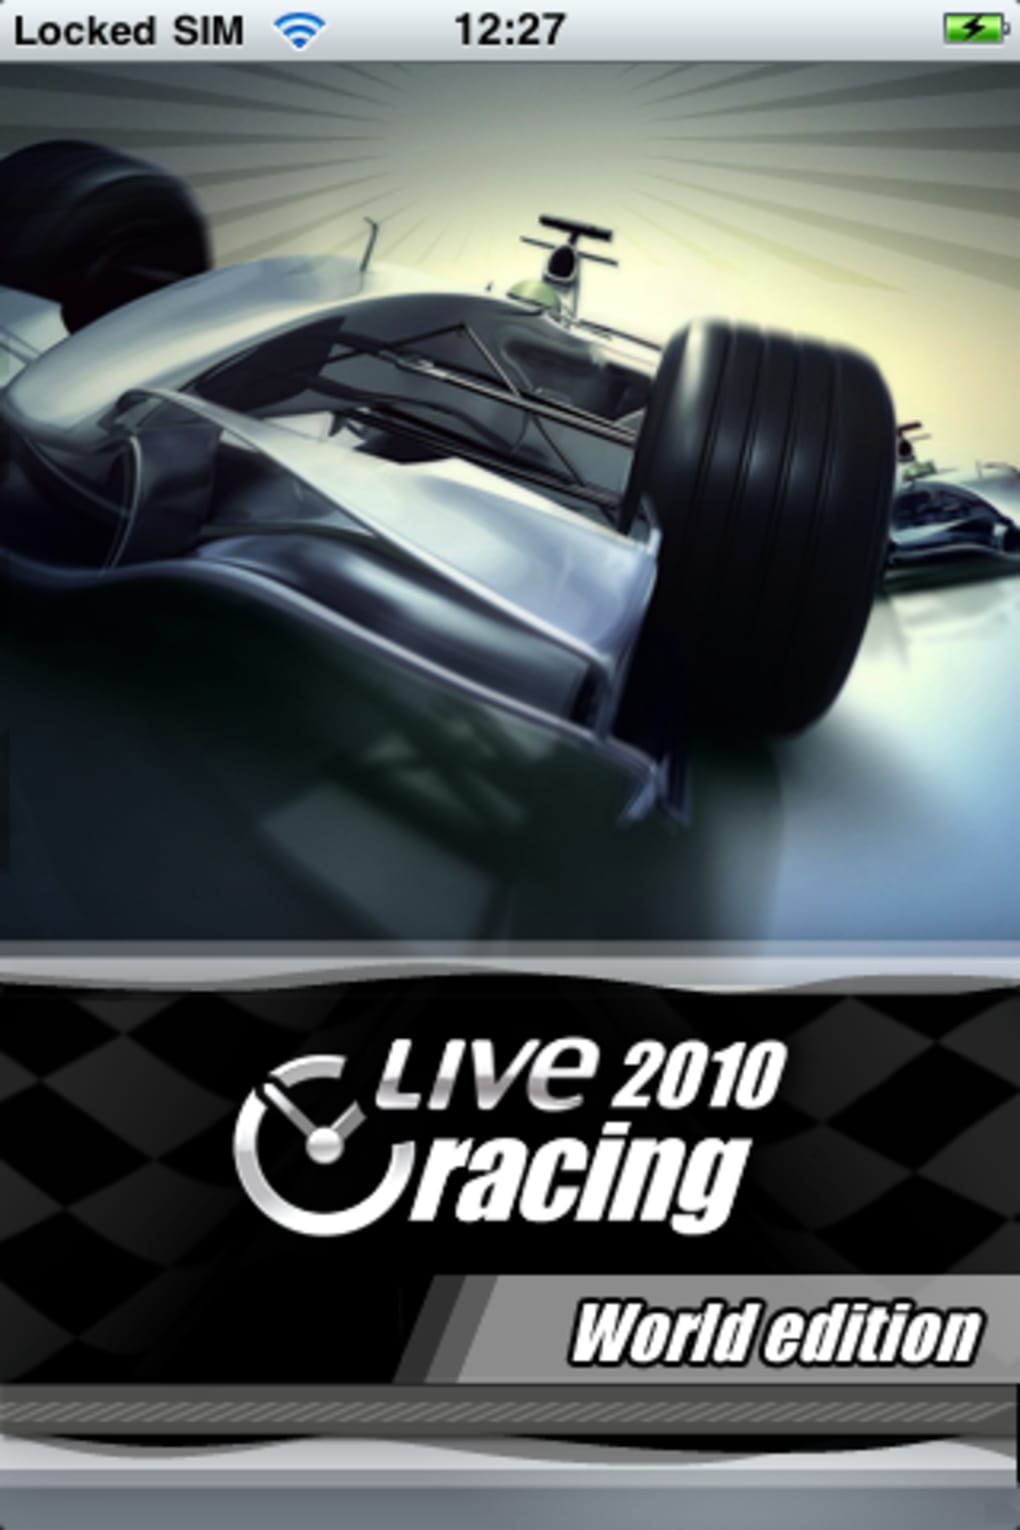 free download 2010 formula 1 season